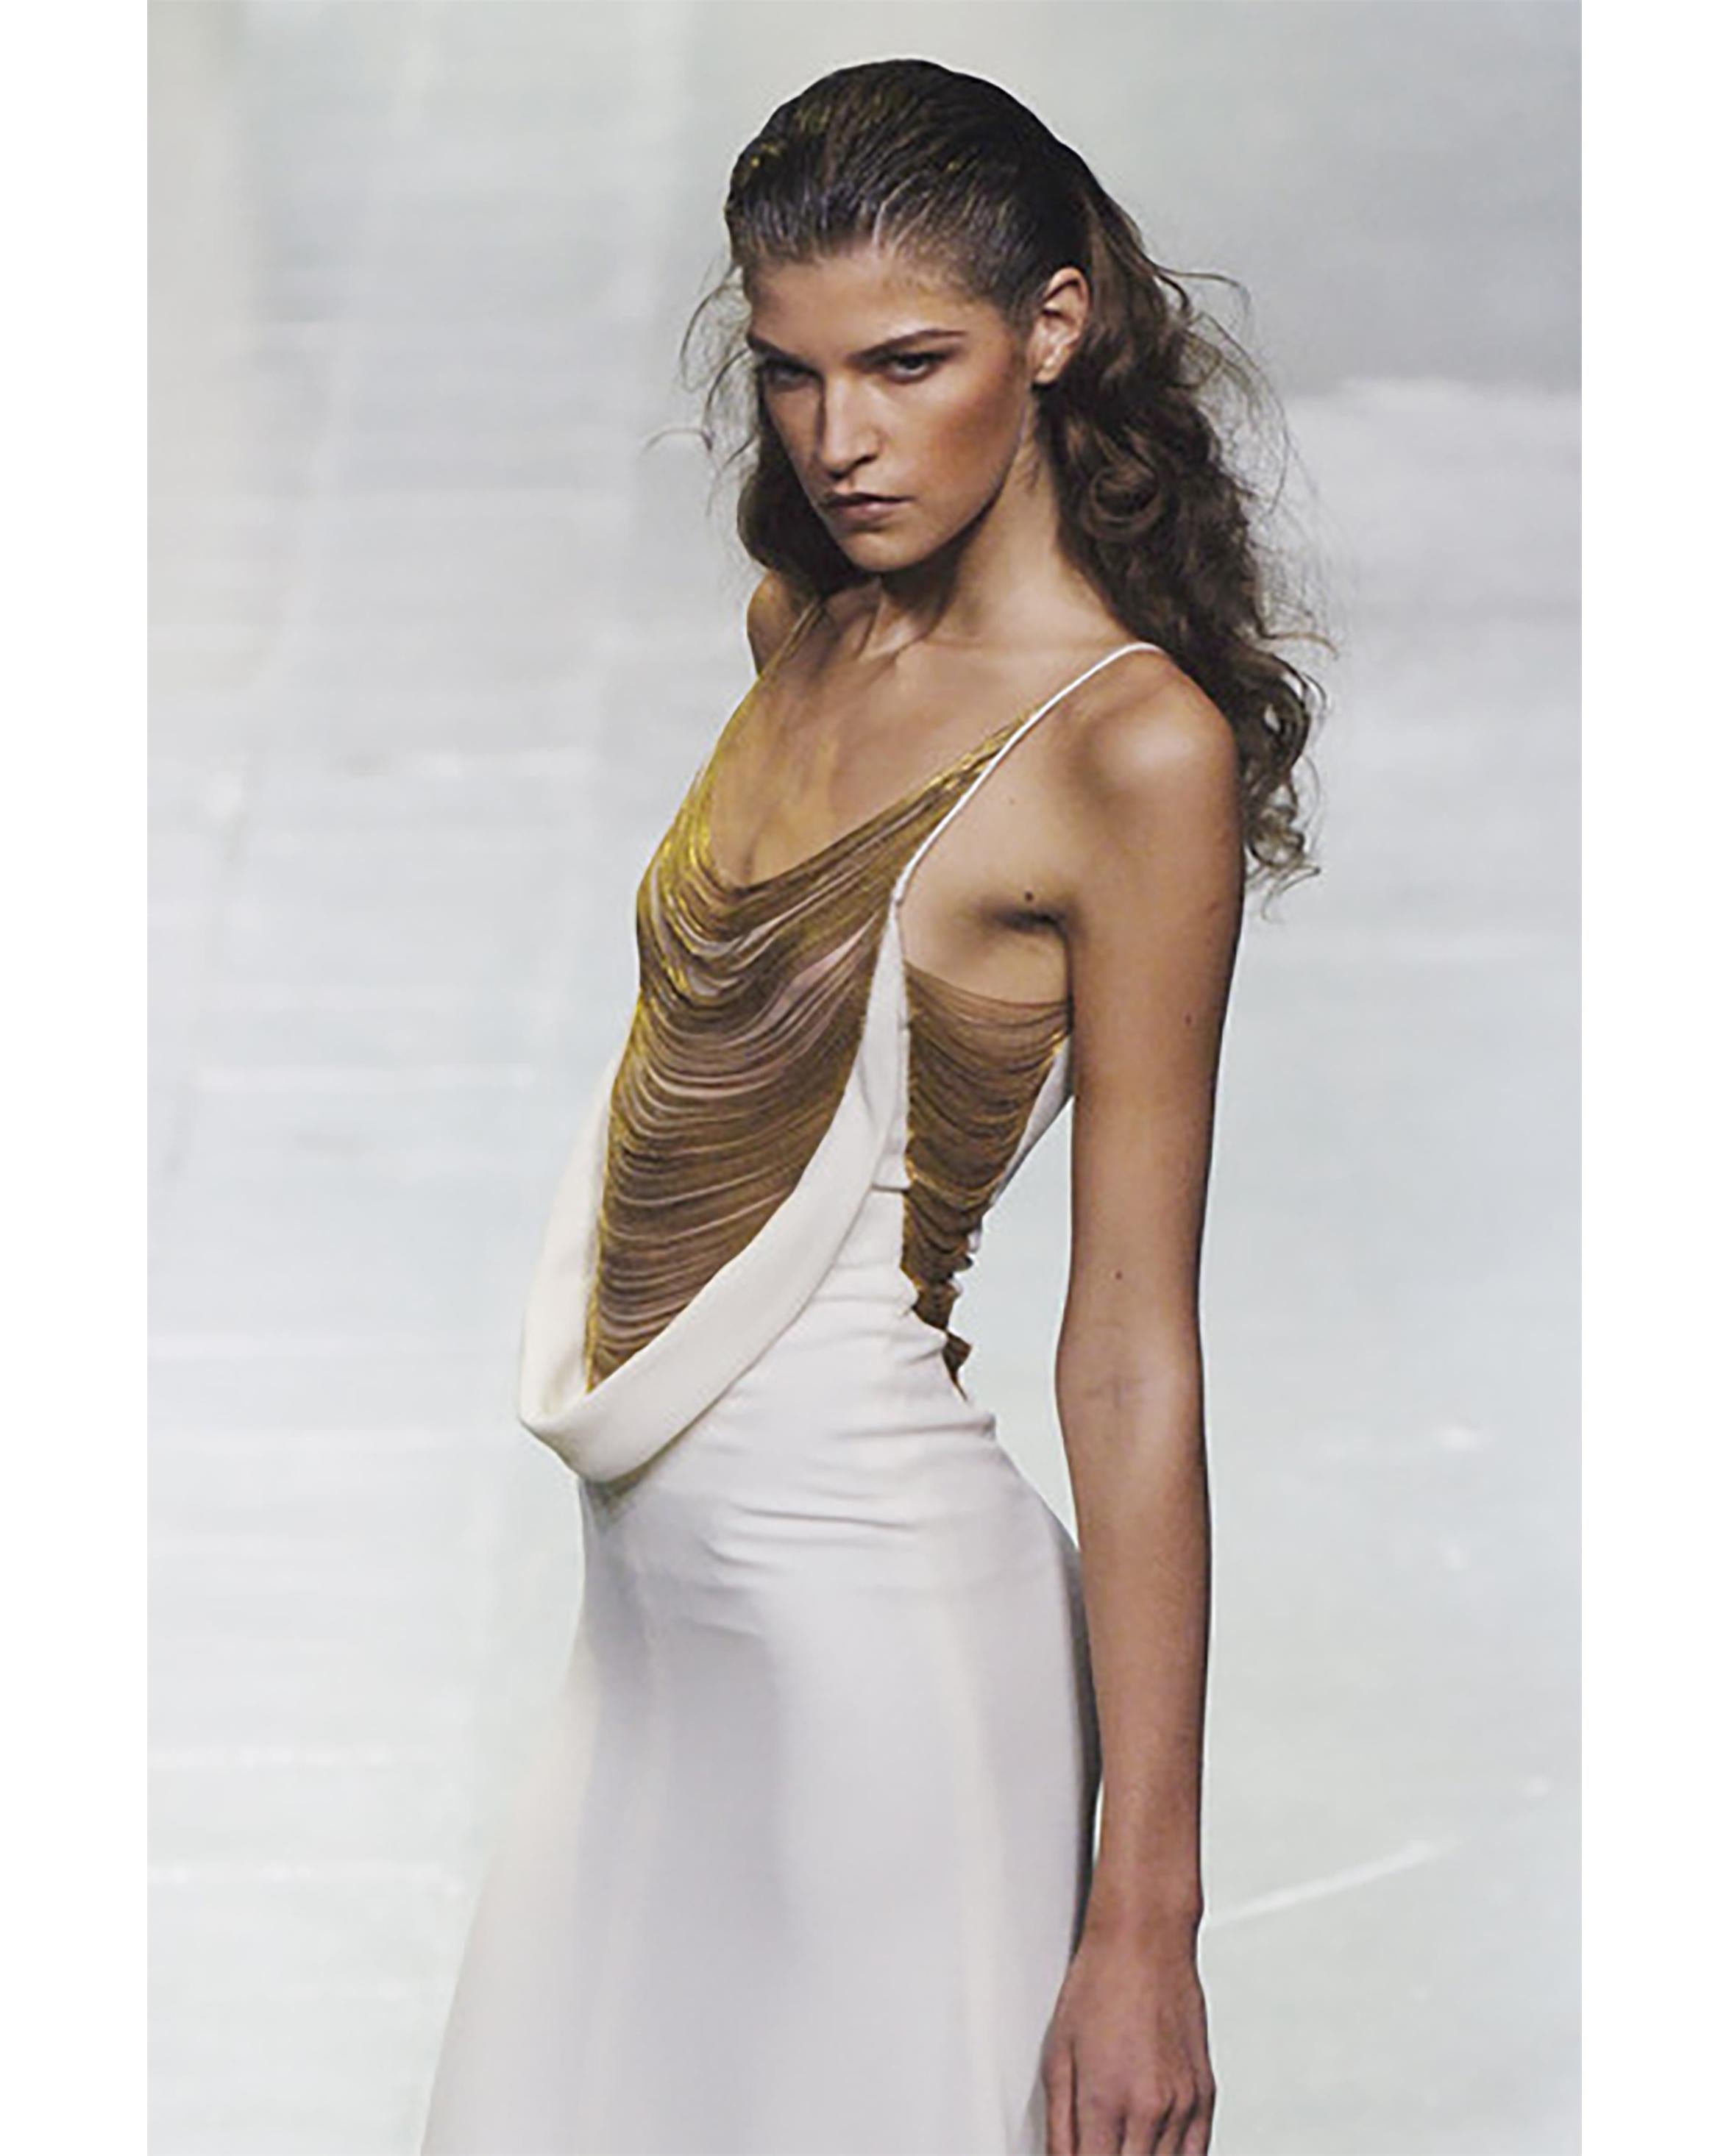 S/S 2006 Alexander McQueen Gold Chain White Gown 2